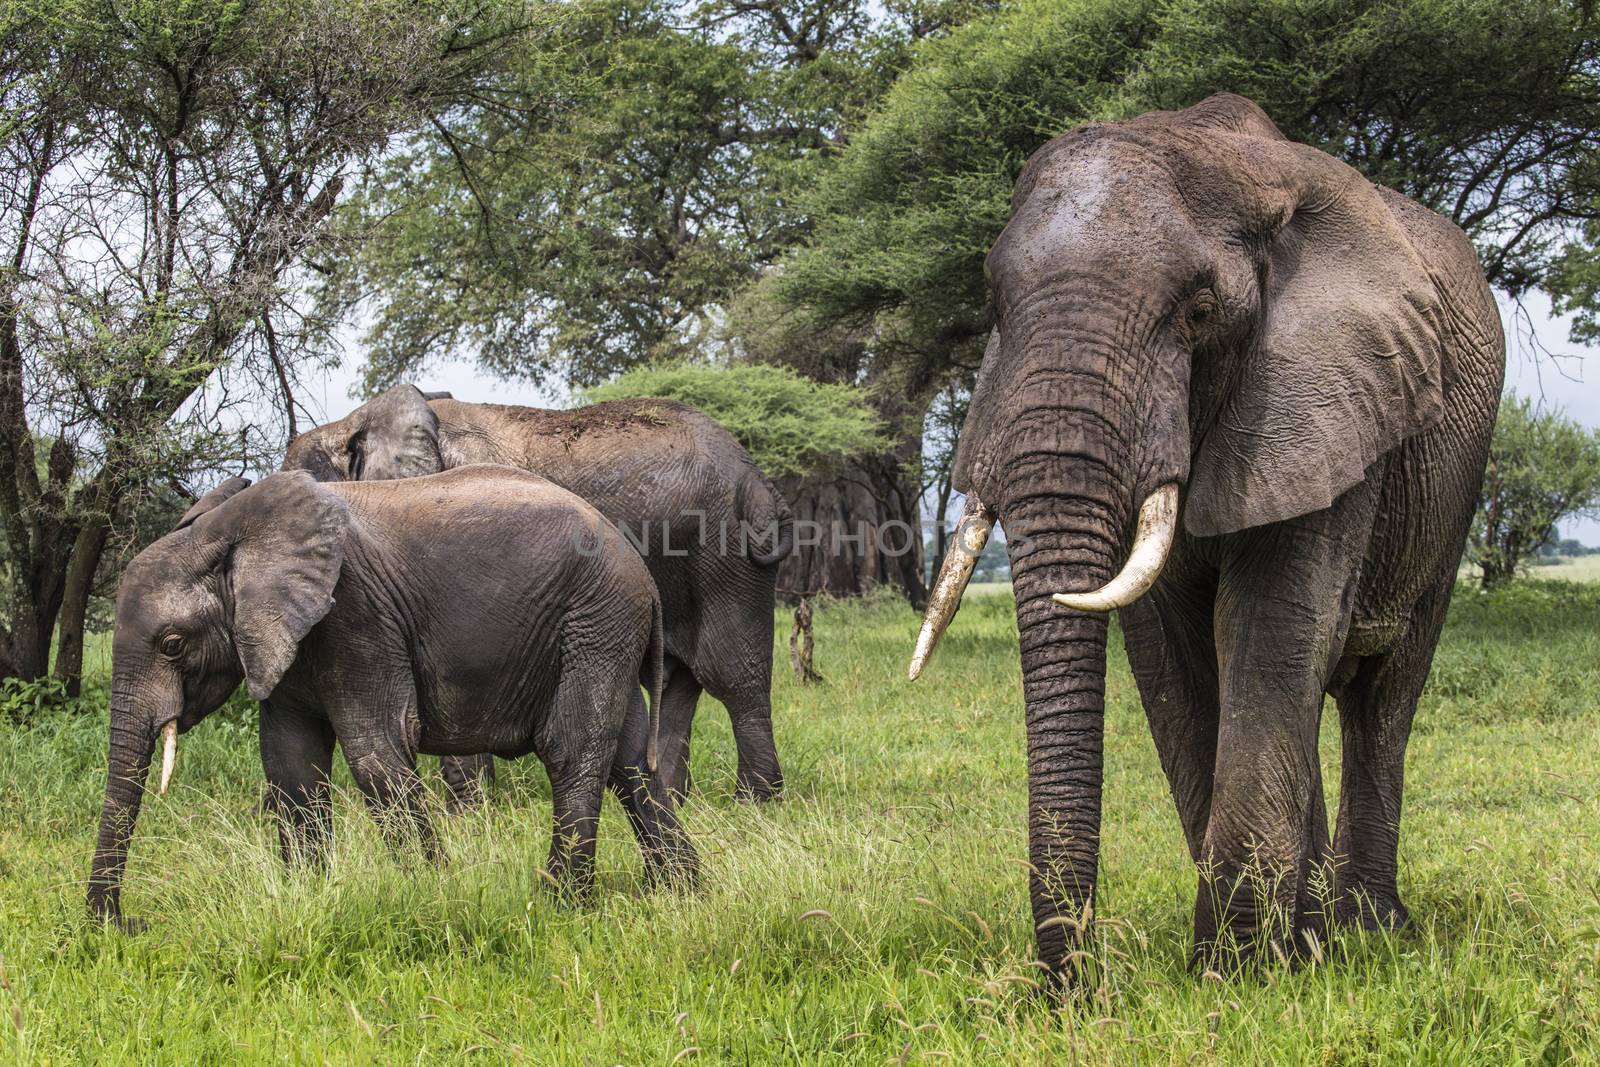 African elephants walking in savannah in the Tarangire National Park, Tanzania